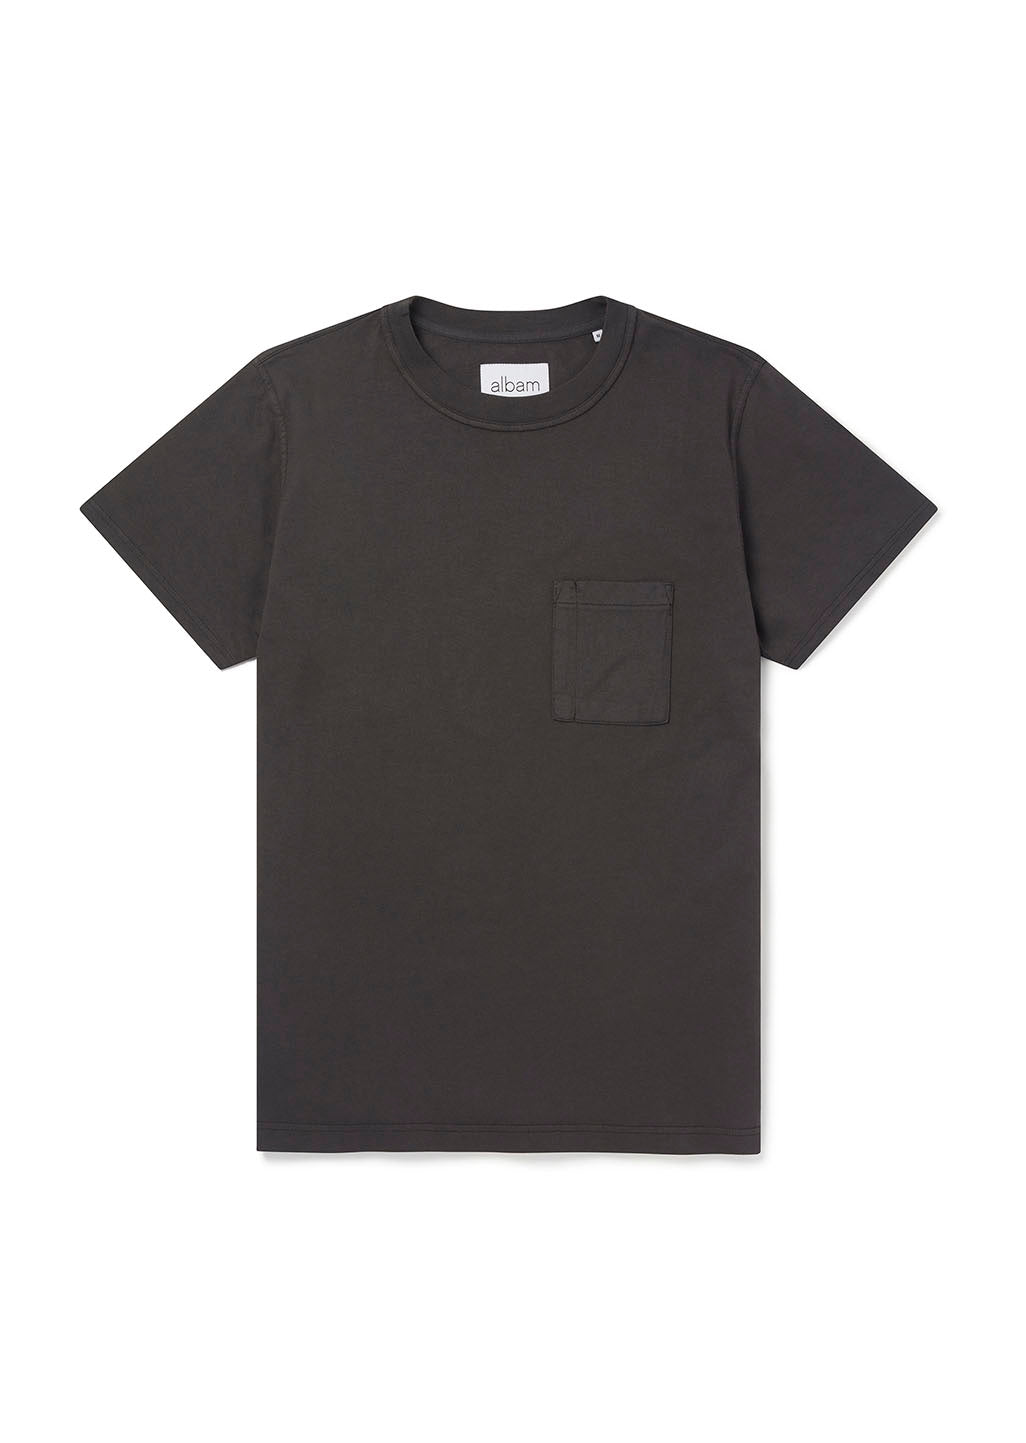 Albam SS Workwear T-Shirt - Black